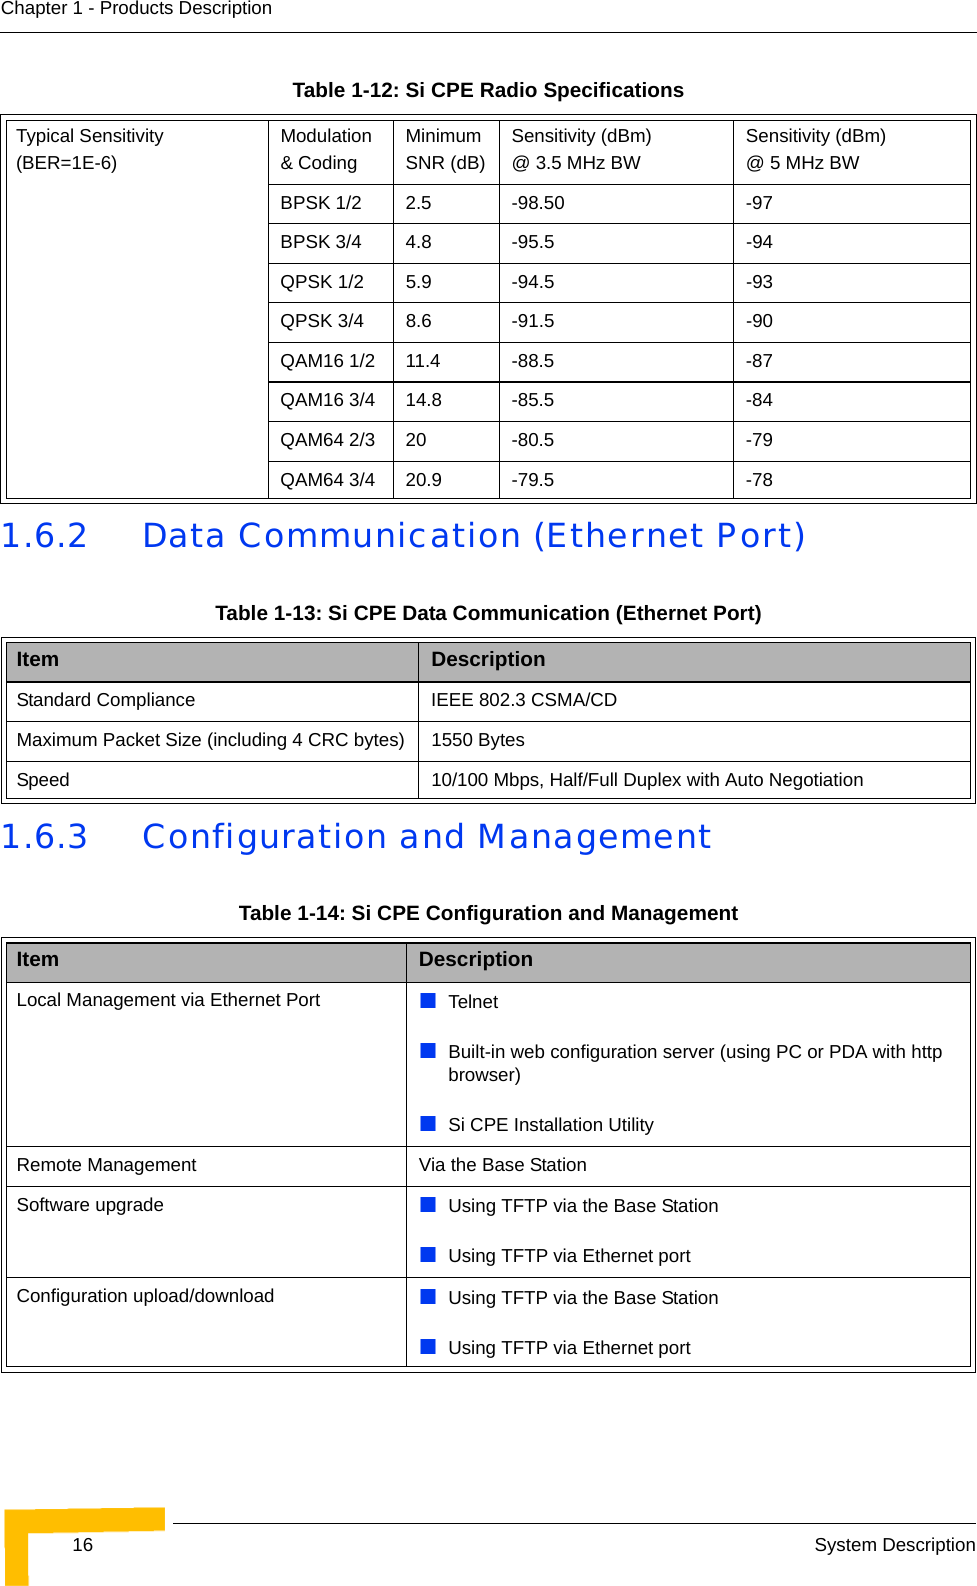 16 System DescriptionChapter 1 - Products Description1.6.2 Data Communication (Ethernet Port)1.6.3 Configuration and ManagementTypical Sensitivity (BER=1E-6)Modulation &amp; CodingMinimum SNR (dB)Sensitivity (dBm) @ 3.5 MHz BWSensitivity (dBm) @ 5 MHz BWBPSK 1/2 2.5 -98.50 -97BPSK 3/4 4.8 -95.5 -94QPSK 1/2 5.9 -94.5 -93QPSK 3/4 8.6 -91.5 -90QAM16 1/2 11.4 -88.5 -87QAM16 3/4 14.8 -85.5 -84QAM64 2/3 20 -80.5 -79QAM64 3/4 20.9 -79.5 -78Table 1-13: Si CPE Data Communication (Ethernet Port)Item DescriptionStandard Compliance IEEE 802.3 CSMA/CDMaximum Packet Size (including 4 CRC bytes) 1550 BytesSpeed 10/100 Mbps, Half/Full Duplex with Auto NegotiationTable 1-14: Si CPE Configuration and ManagementItem DescriptionLocal Management via Ethernet Port   TelnetBuilt-in web configuration server (using PC or PDA with http browser)Si CPE Installation UtilityRemote Management Via the Base StationSoftware upgrade Using TFTP via the Base StationUsing TFTP via Ethernet portConfiguration upload/download Using TFTP via the Base StationUsing TFTP via Ethernet portTable 1-12: Si CPE Radio Specifications